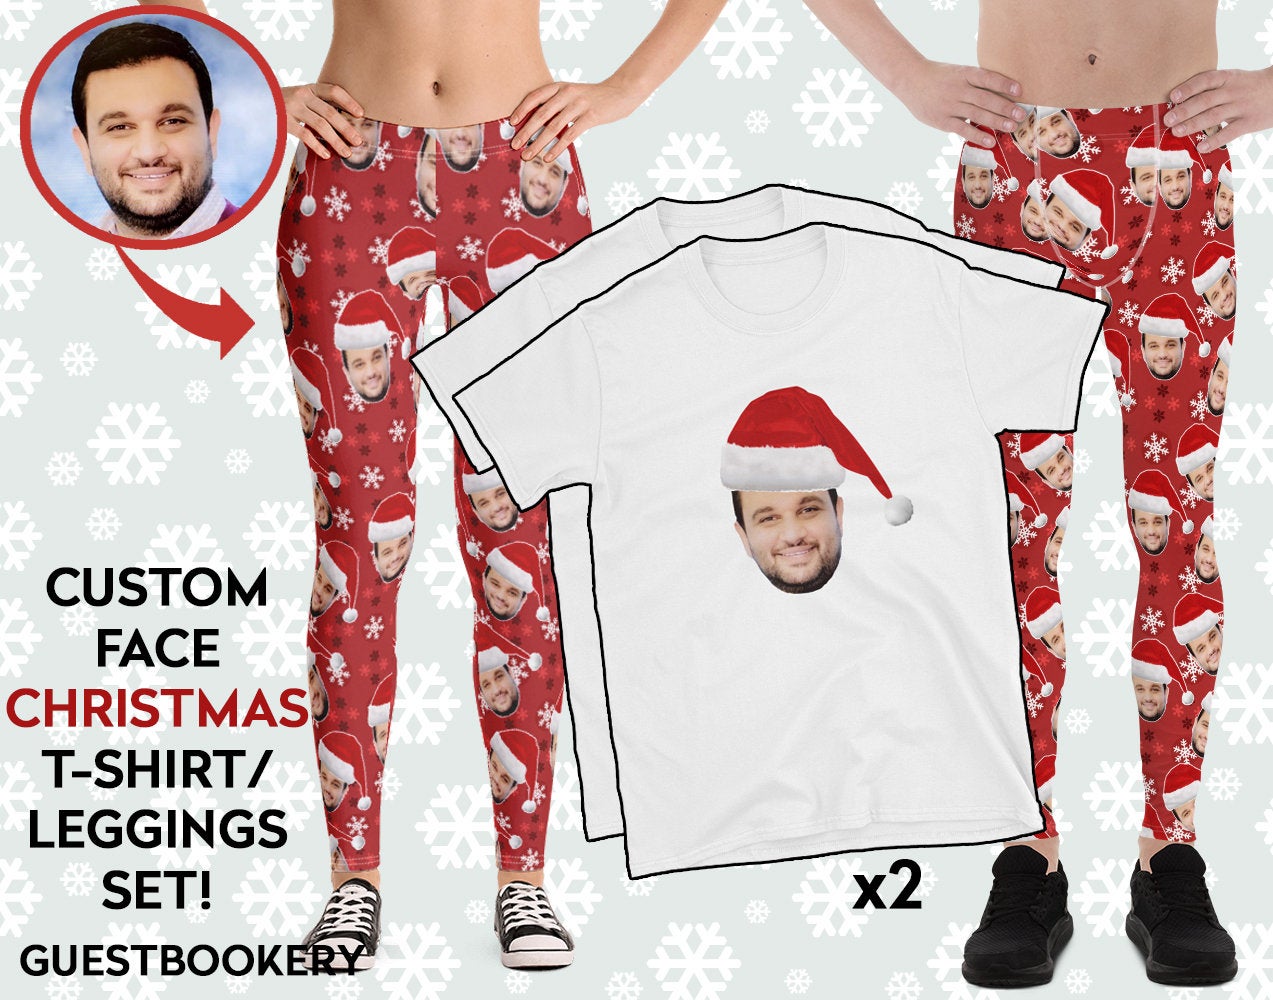 Custom Faces Leggings and Shirt CHRISTMAS SET - FEMALE - Red Snowflakes Pattern